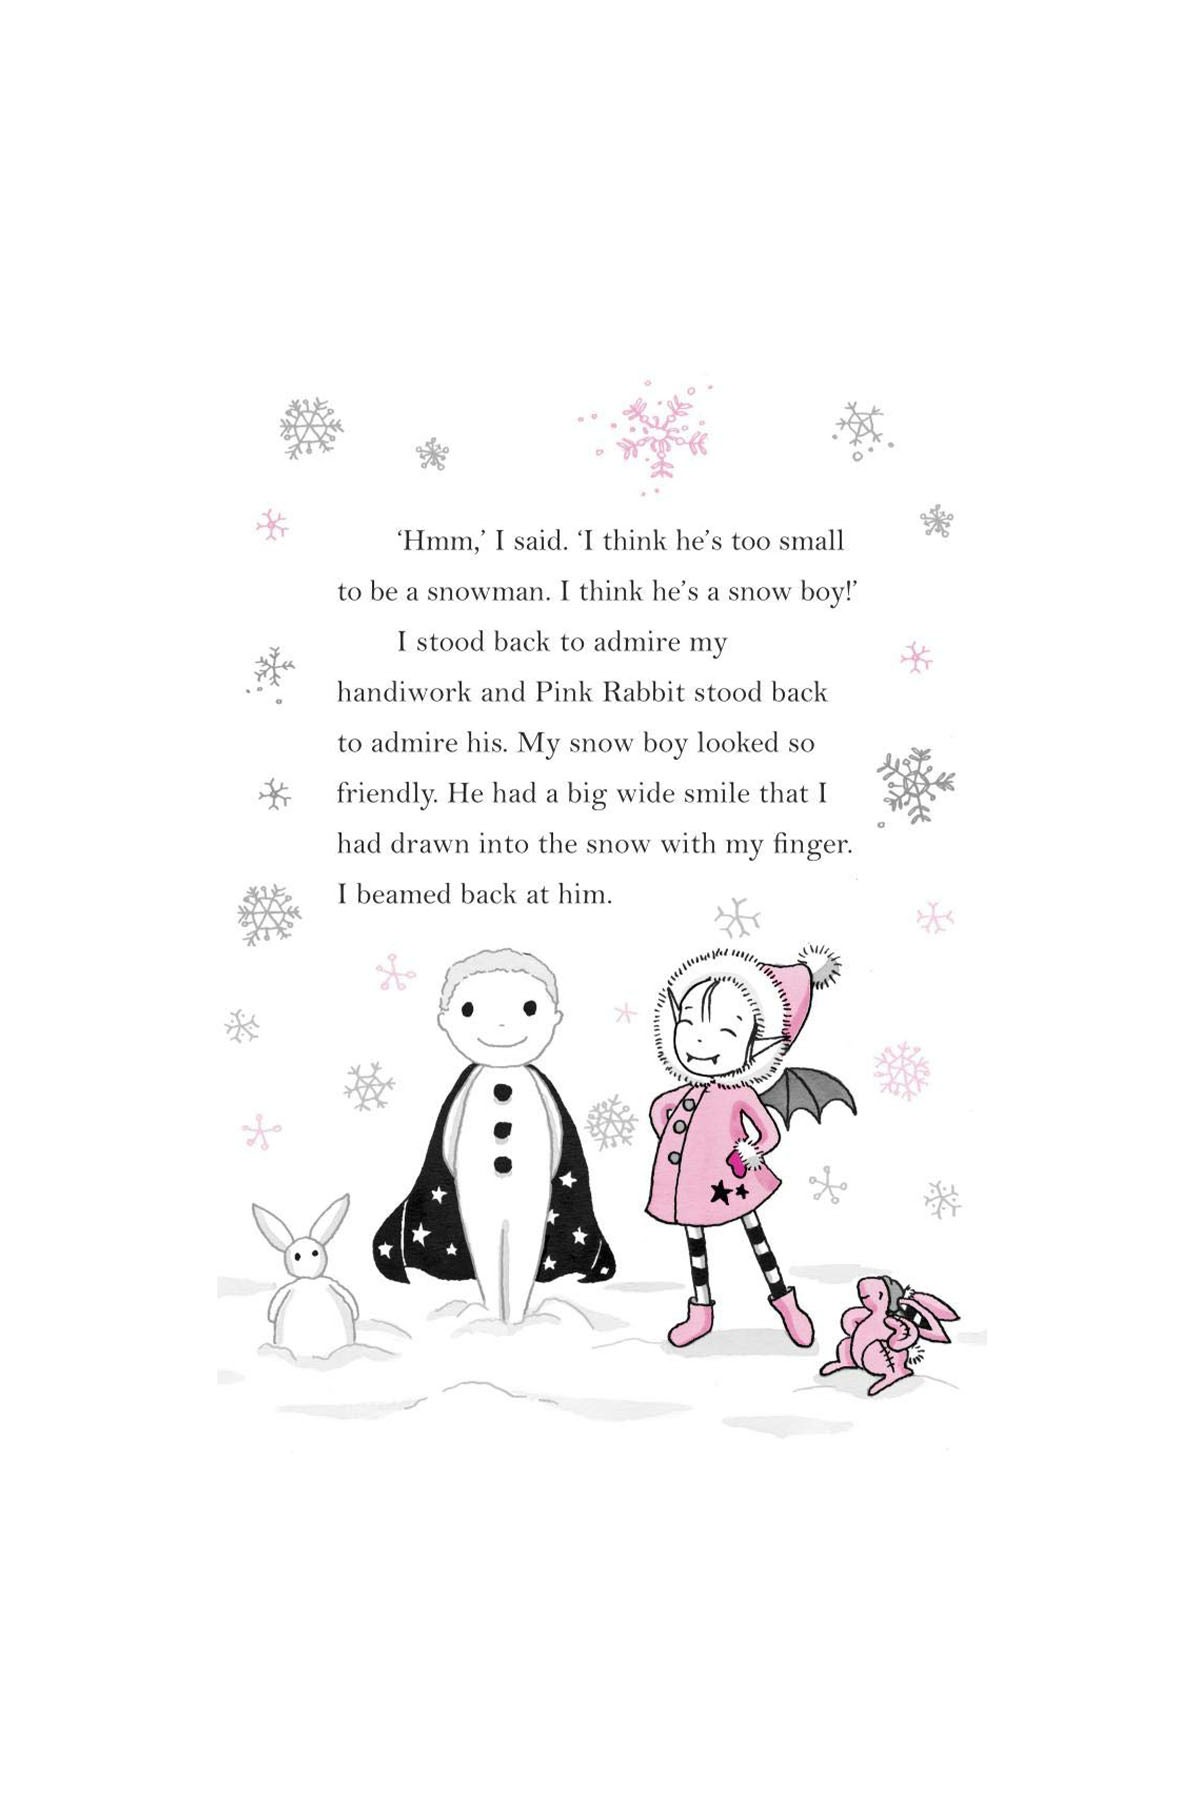 Oxford Childrens Book - Isadora Moon Makes Winter Magic